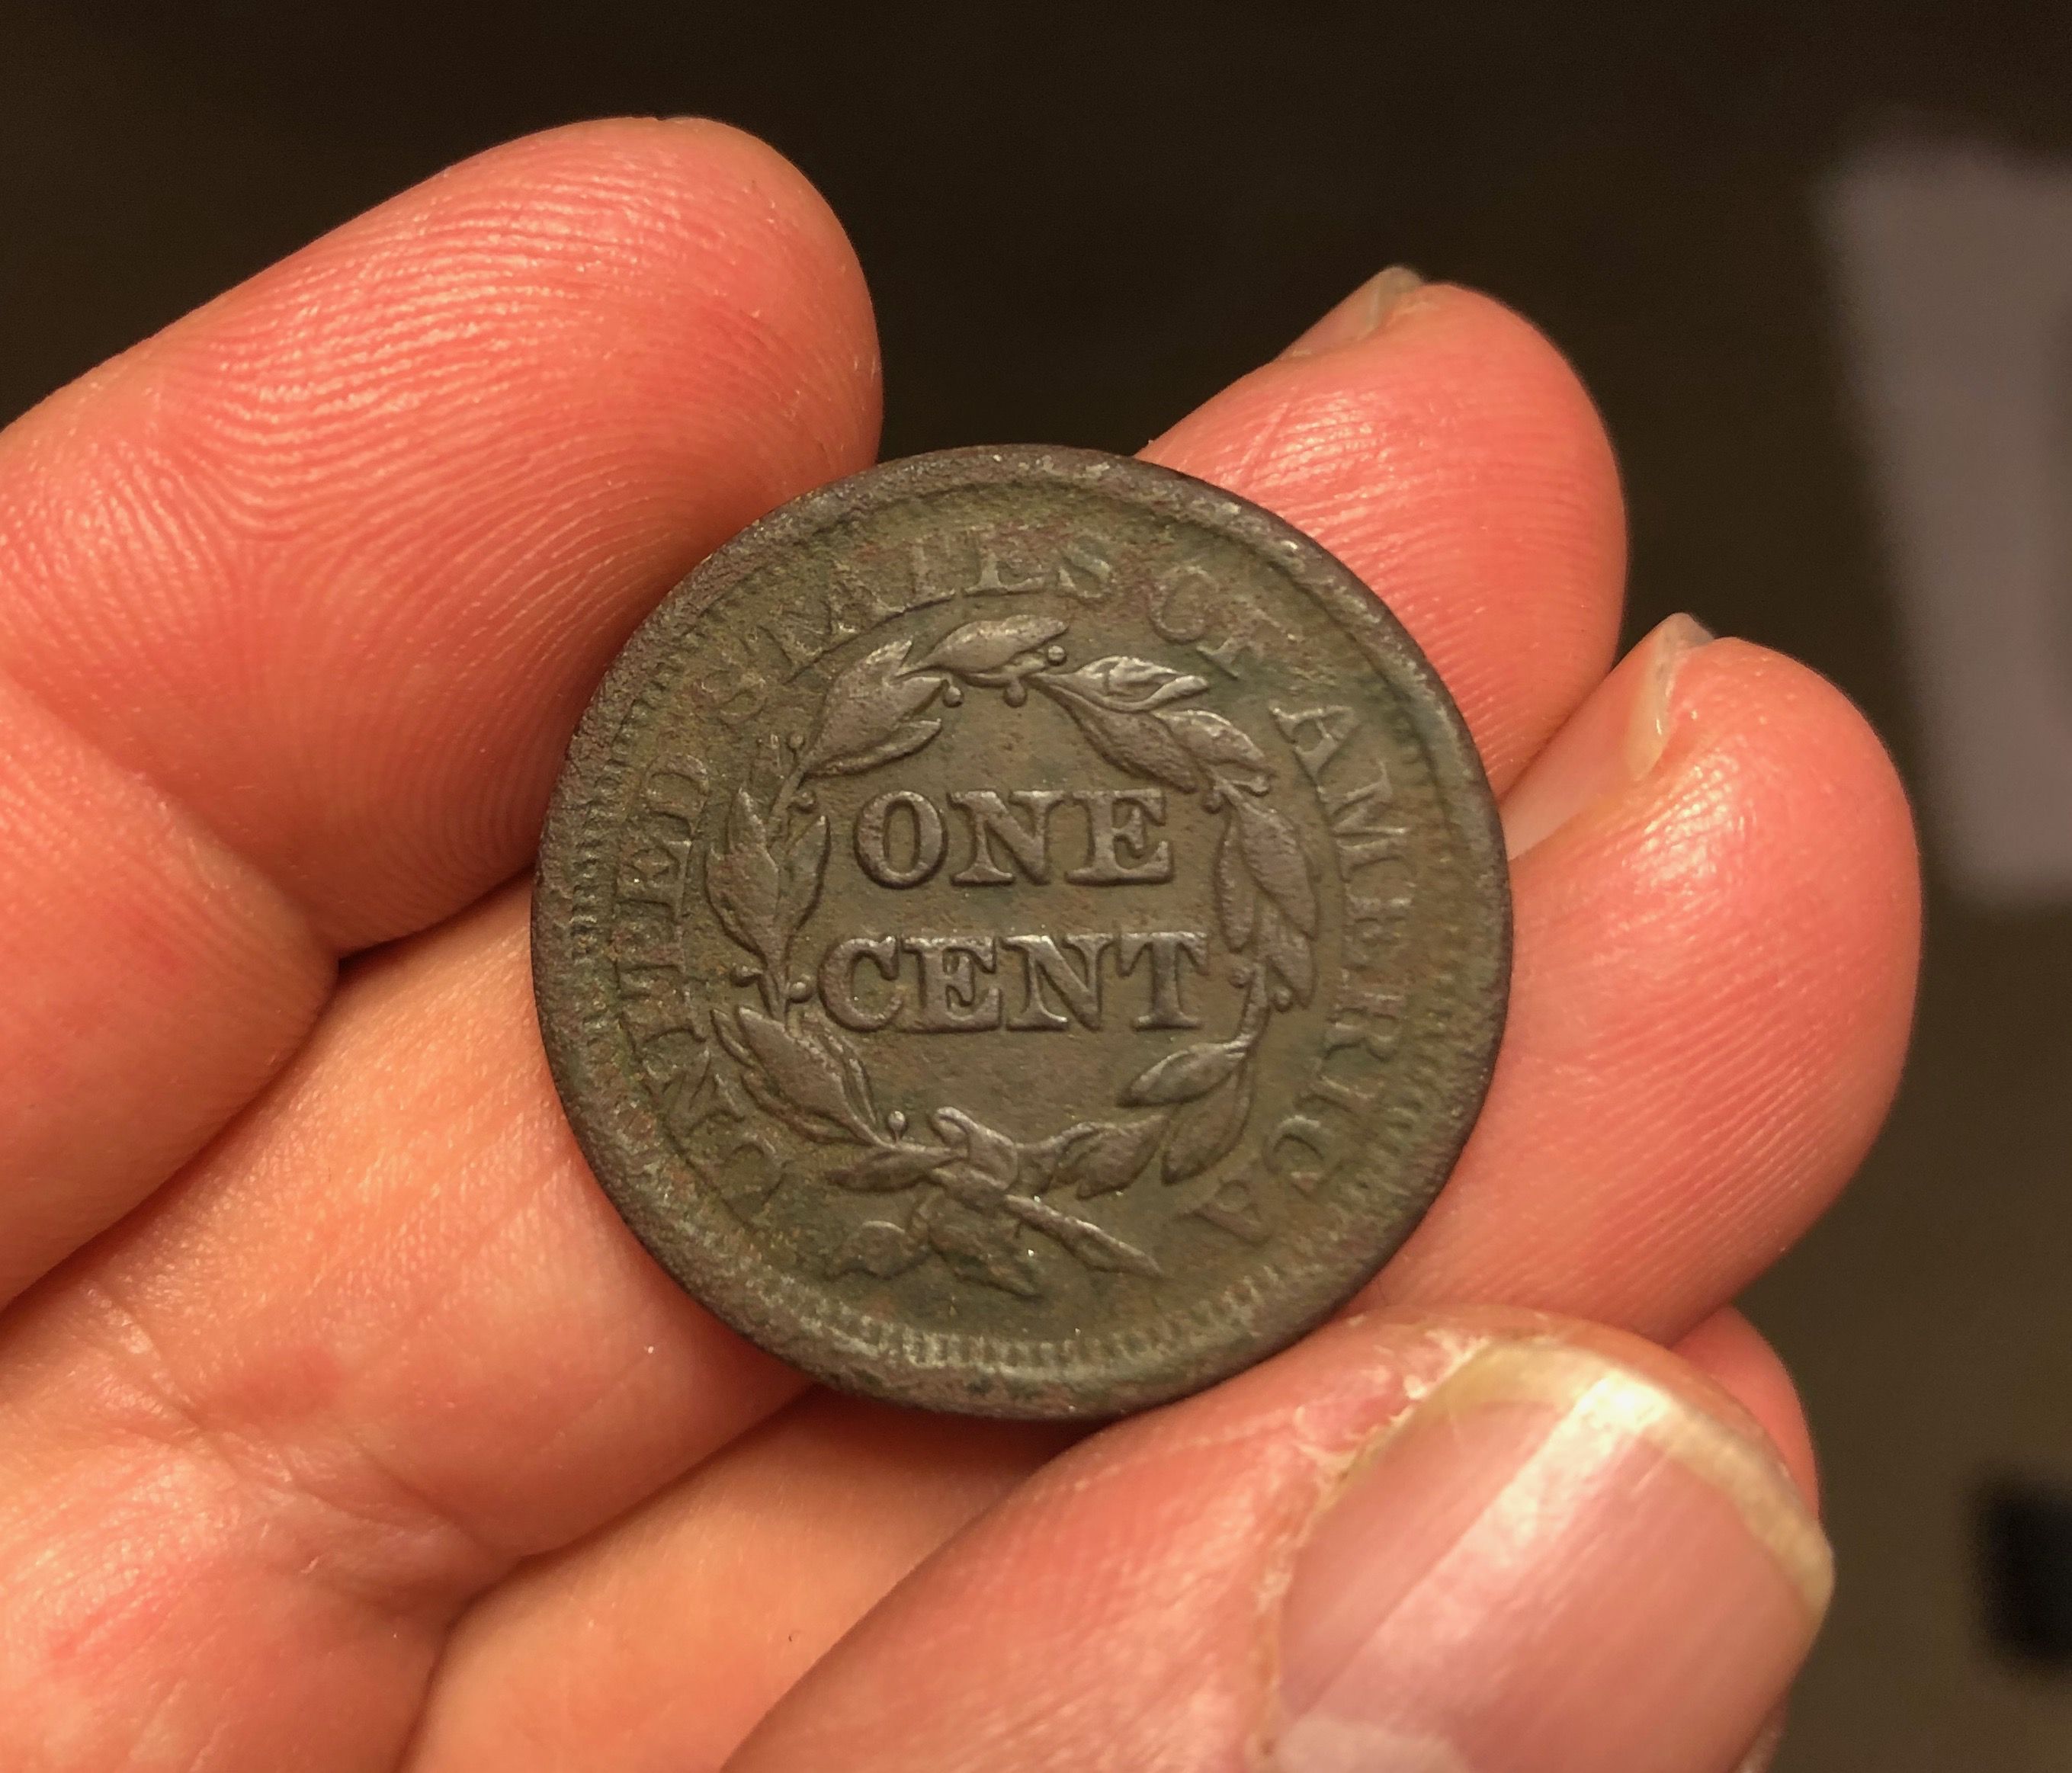 1851 Large Cent
REVERSE